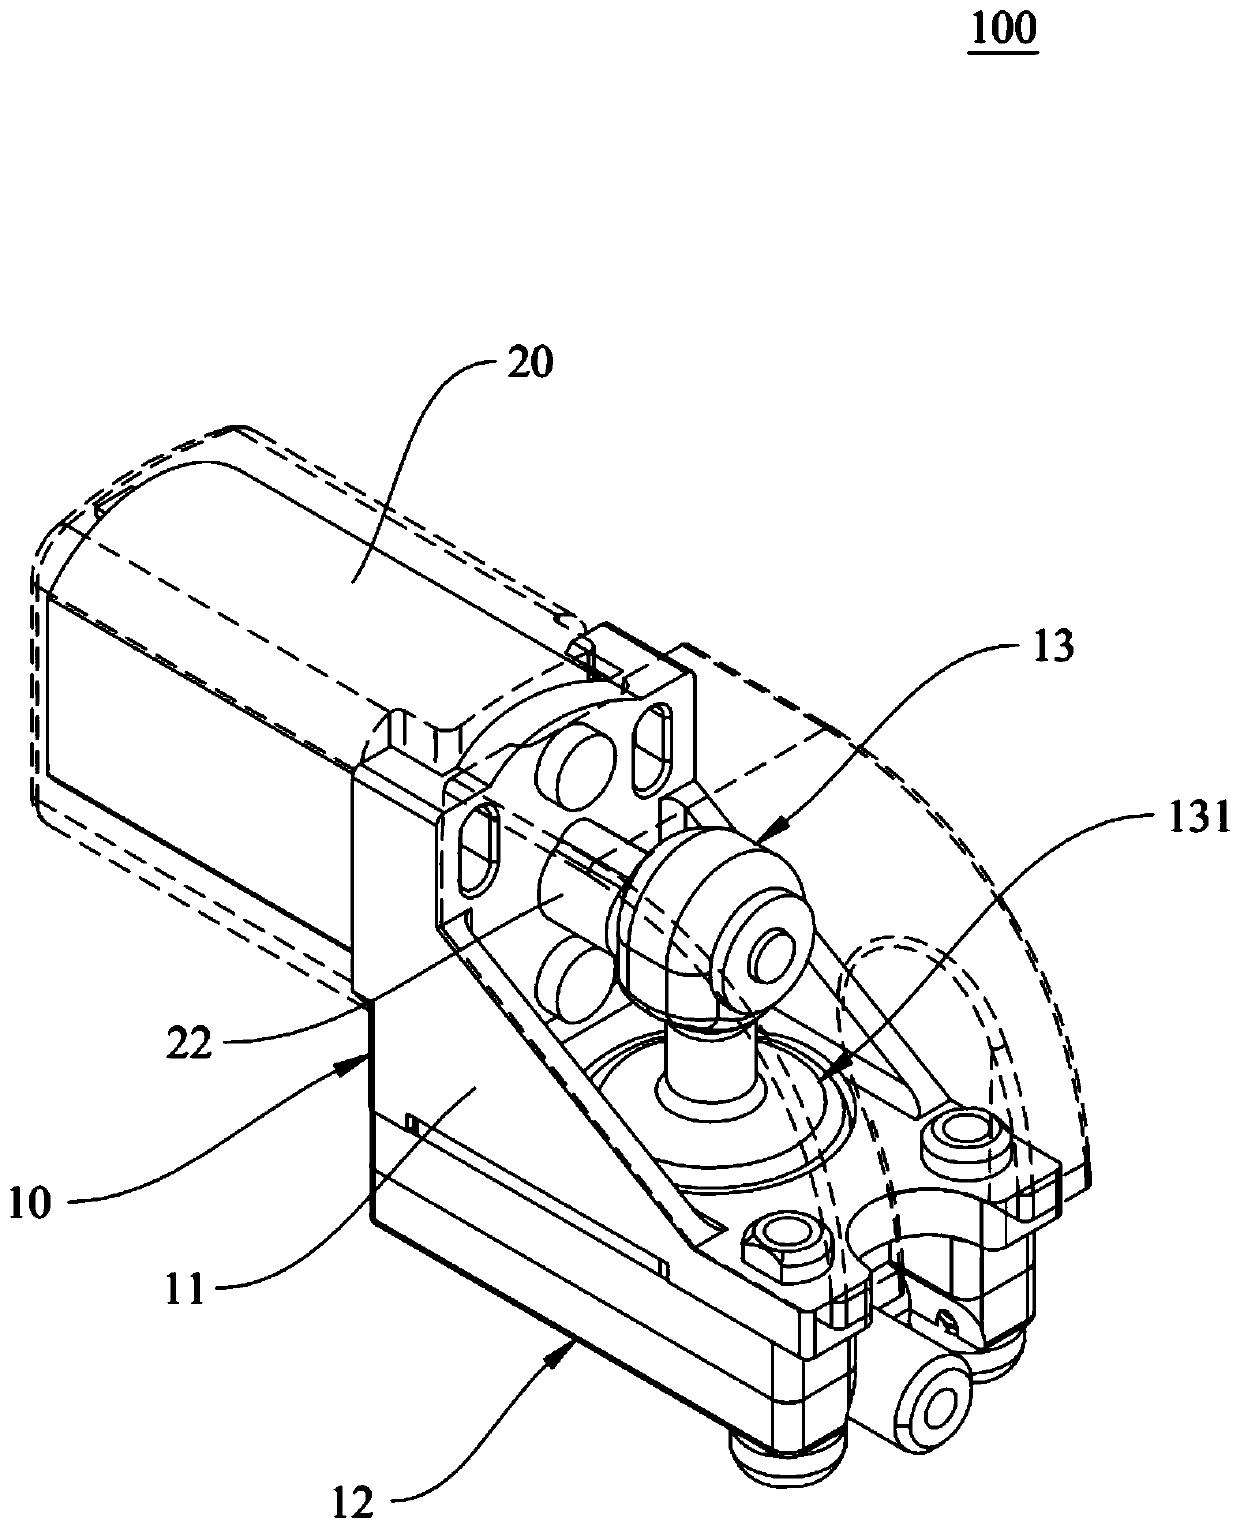 Single arm micro pneumatic pump device